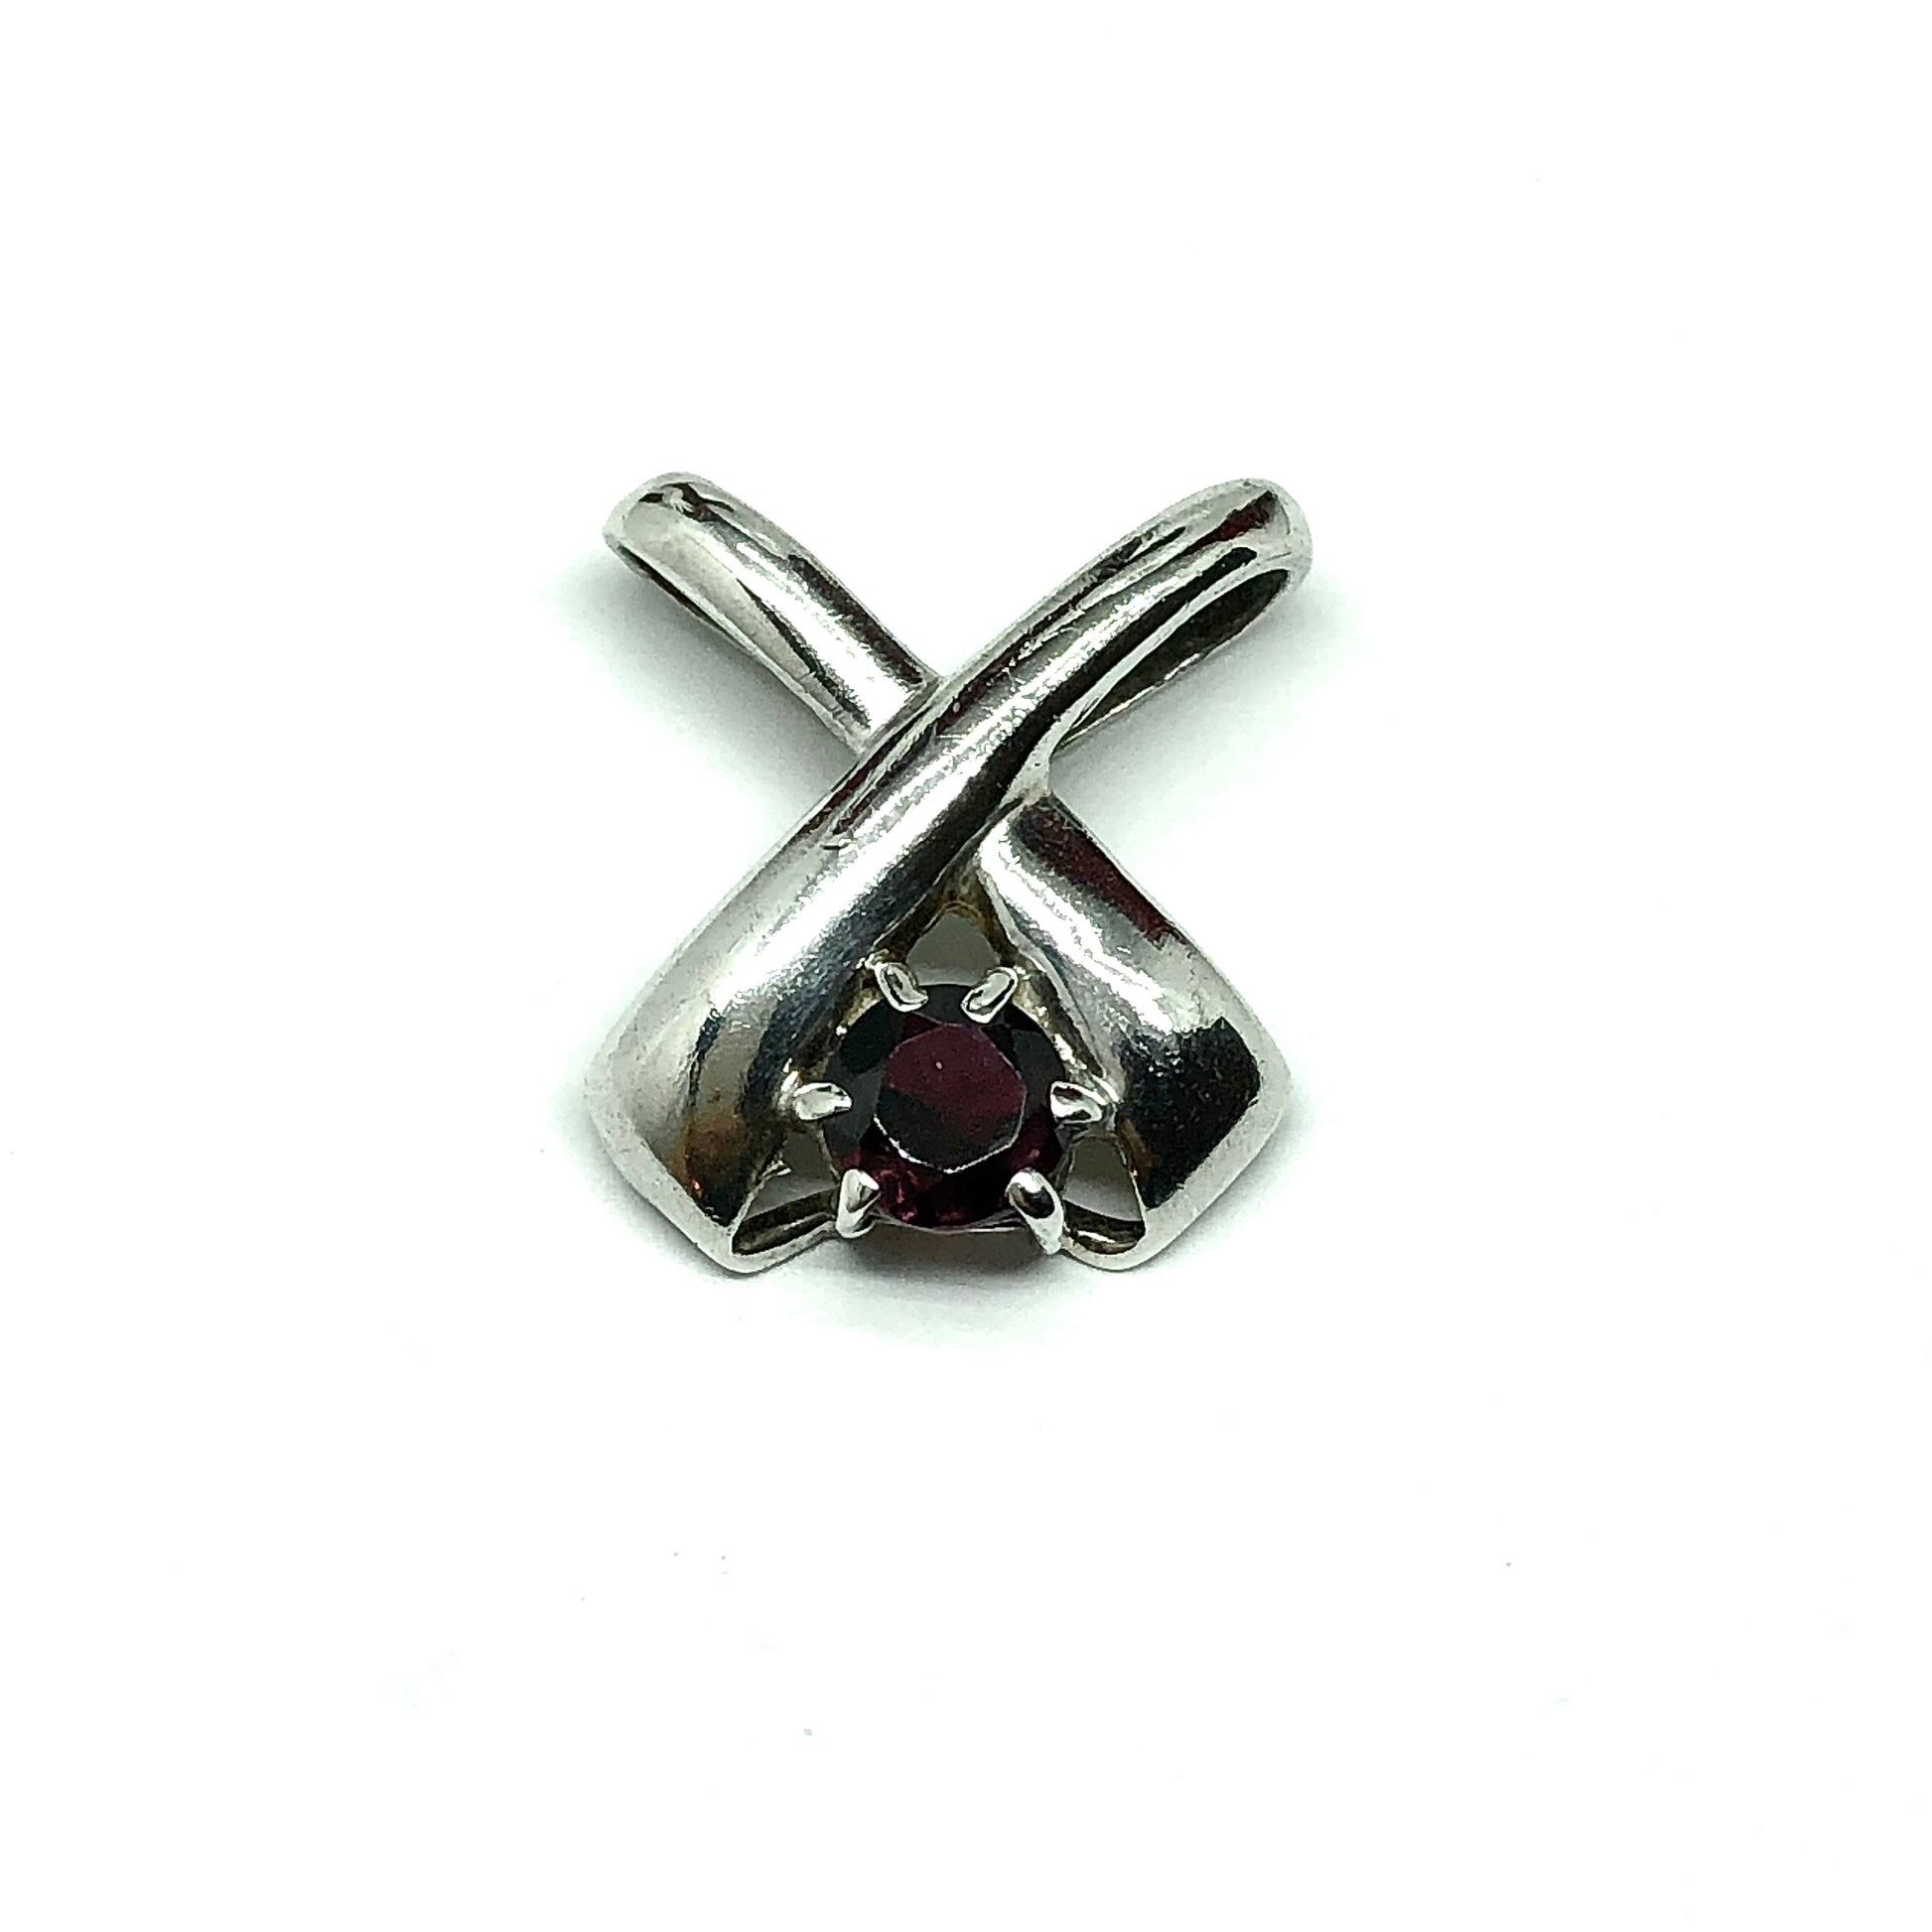 Jewelry | 1980s Sterling Silver Crossover Design Garnet Pendant Only - Blingschlingers.com USA